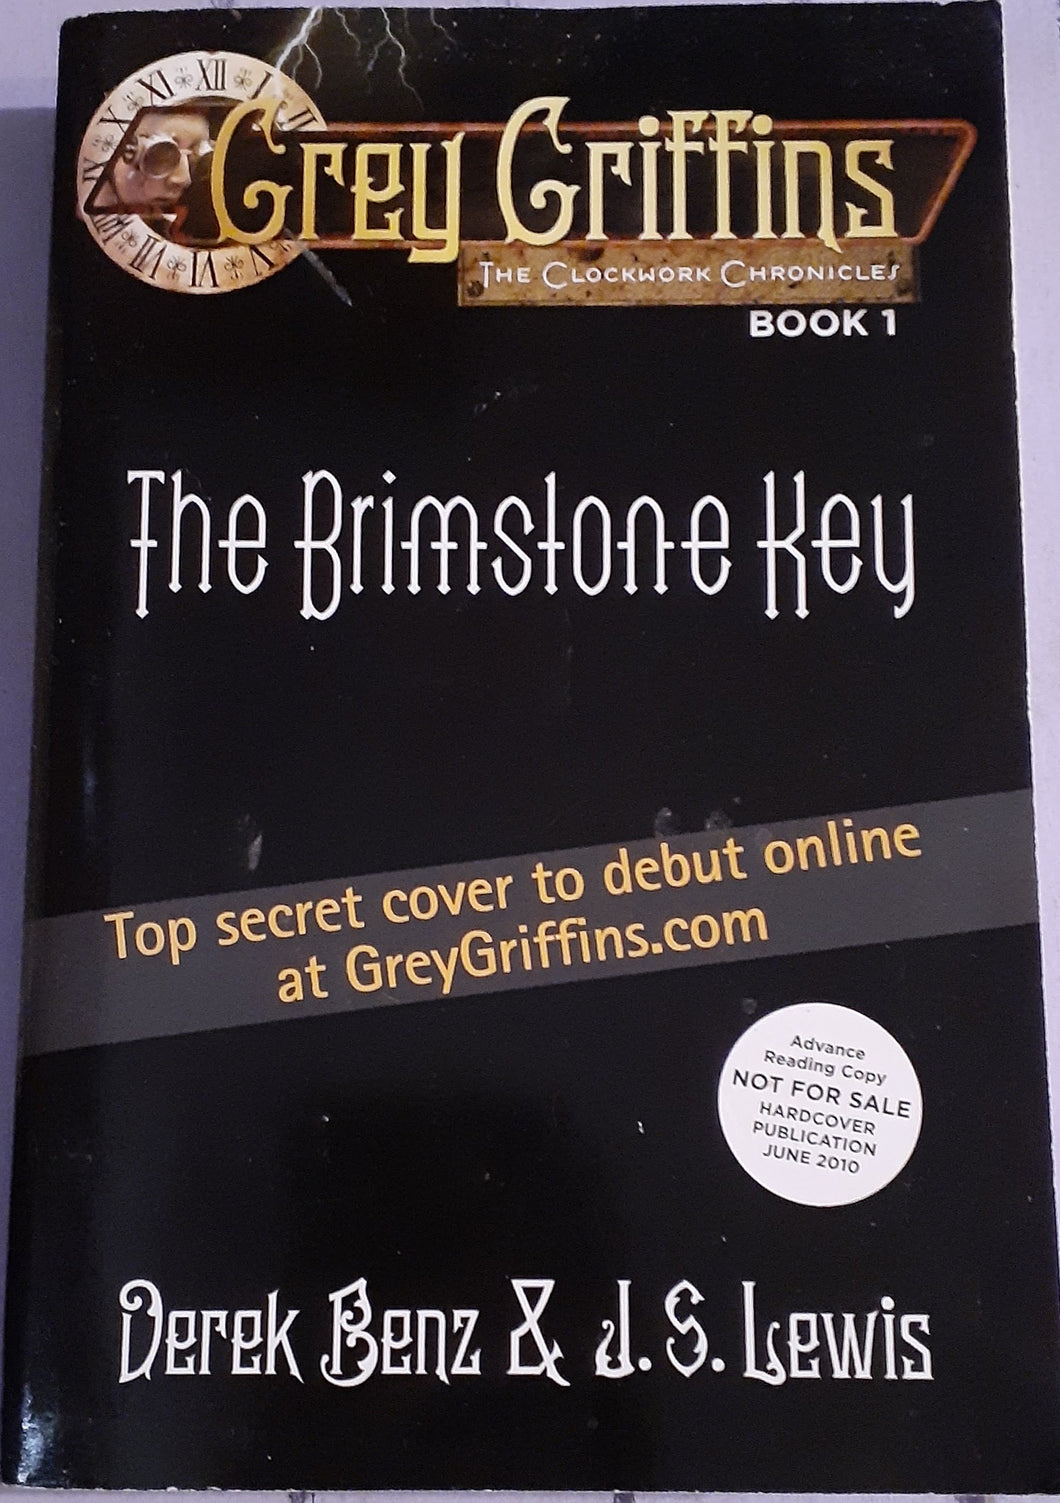 Grey Grffons The Clockwork Chronicles - The Brimstone Key